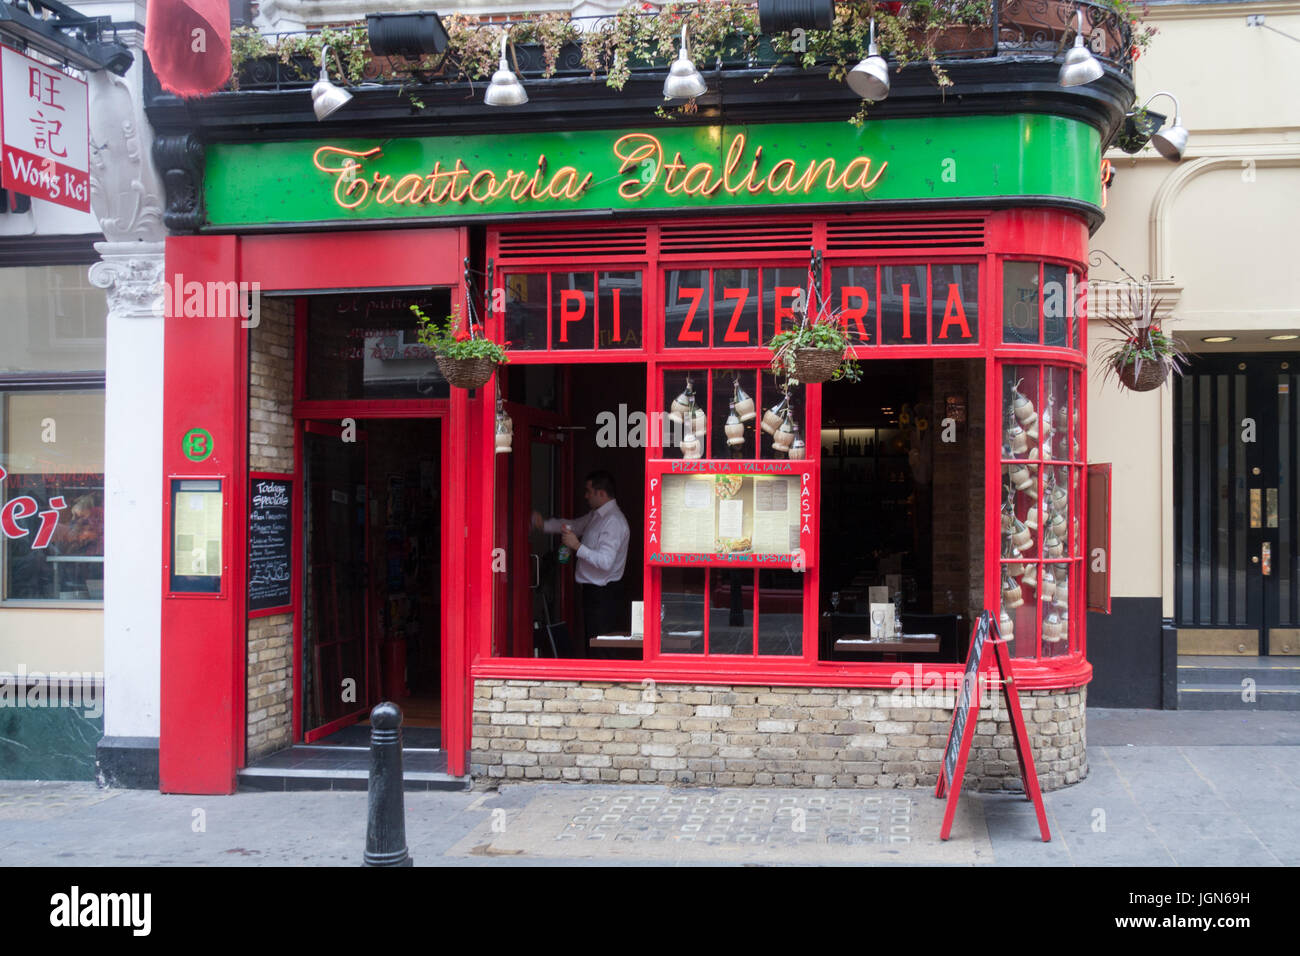 Le restaurant italien Trattoria Italiana, Wardour Street, Chinatown, Londres, Angleterre, Royaume-Uni Banque D'Images